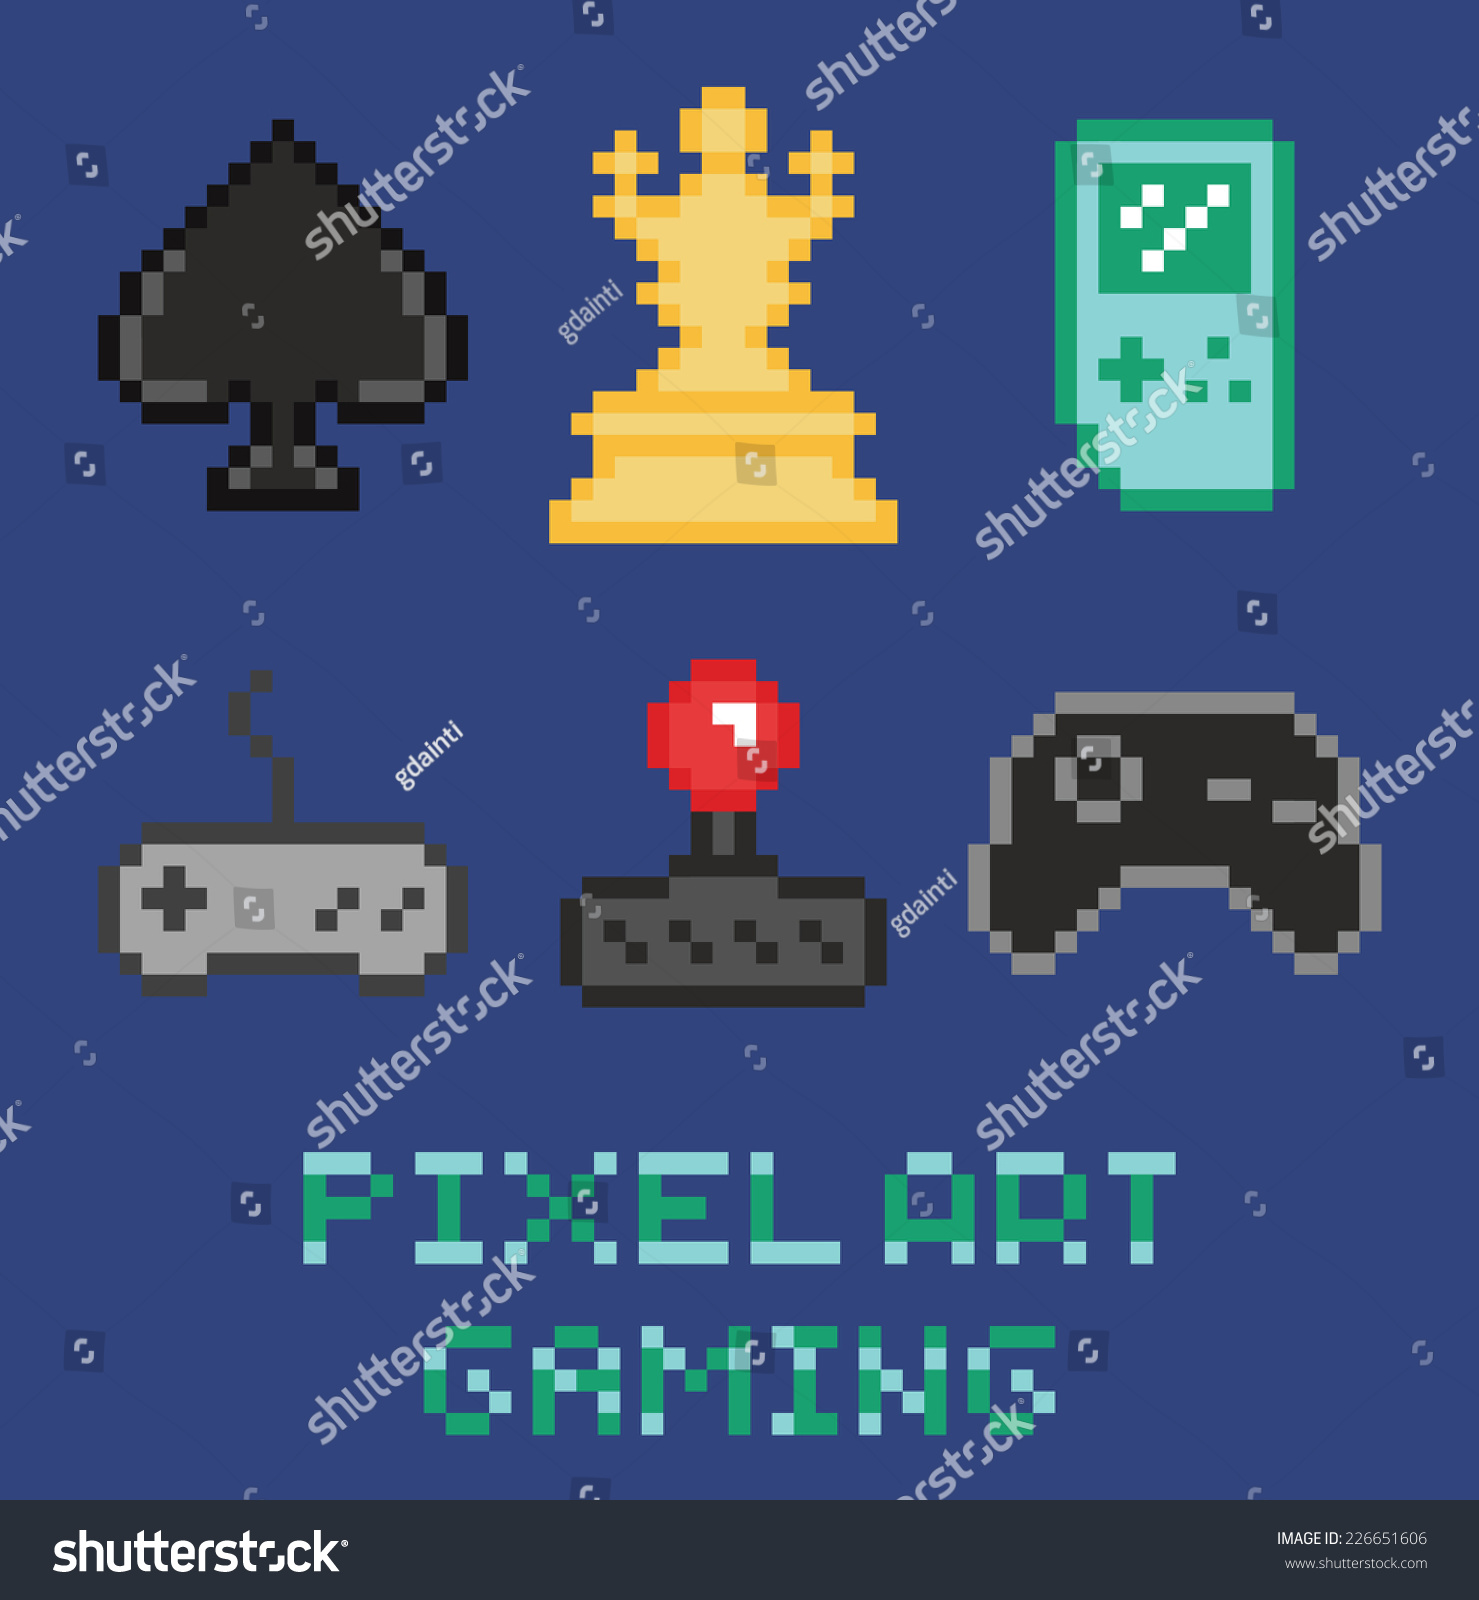 pixel art for game design